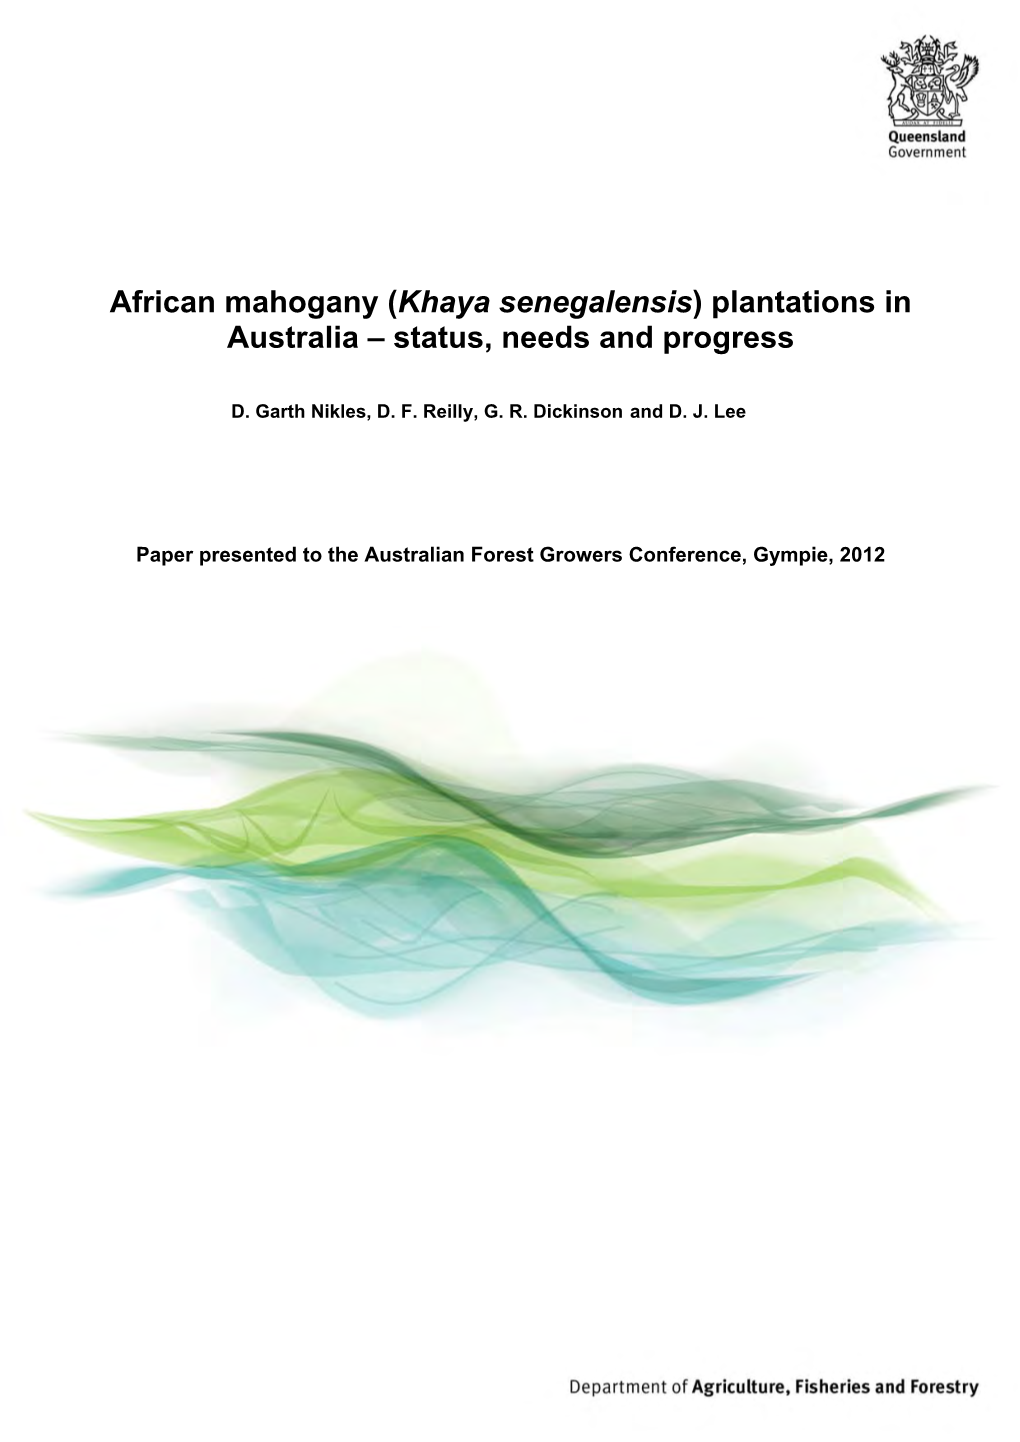 African Mahogany (Khaya Senegalensis) Plantations in Australia – Status, Needs and Progress